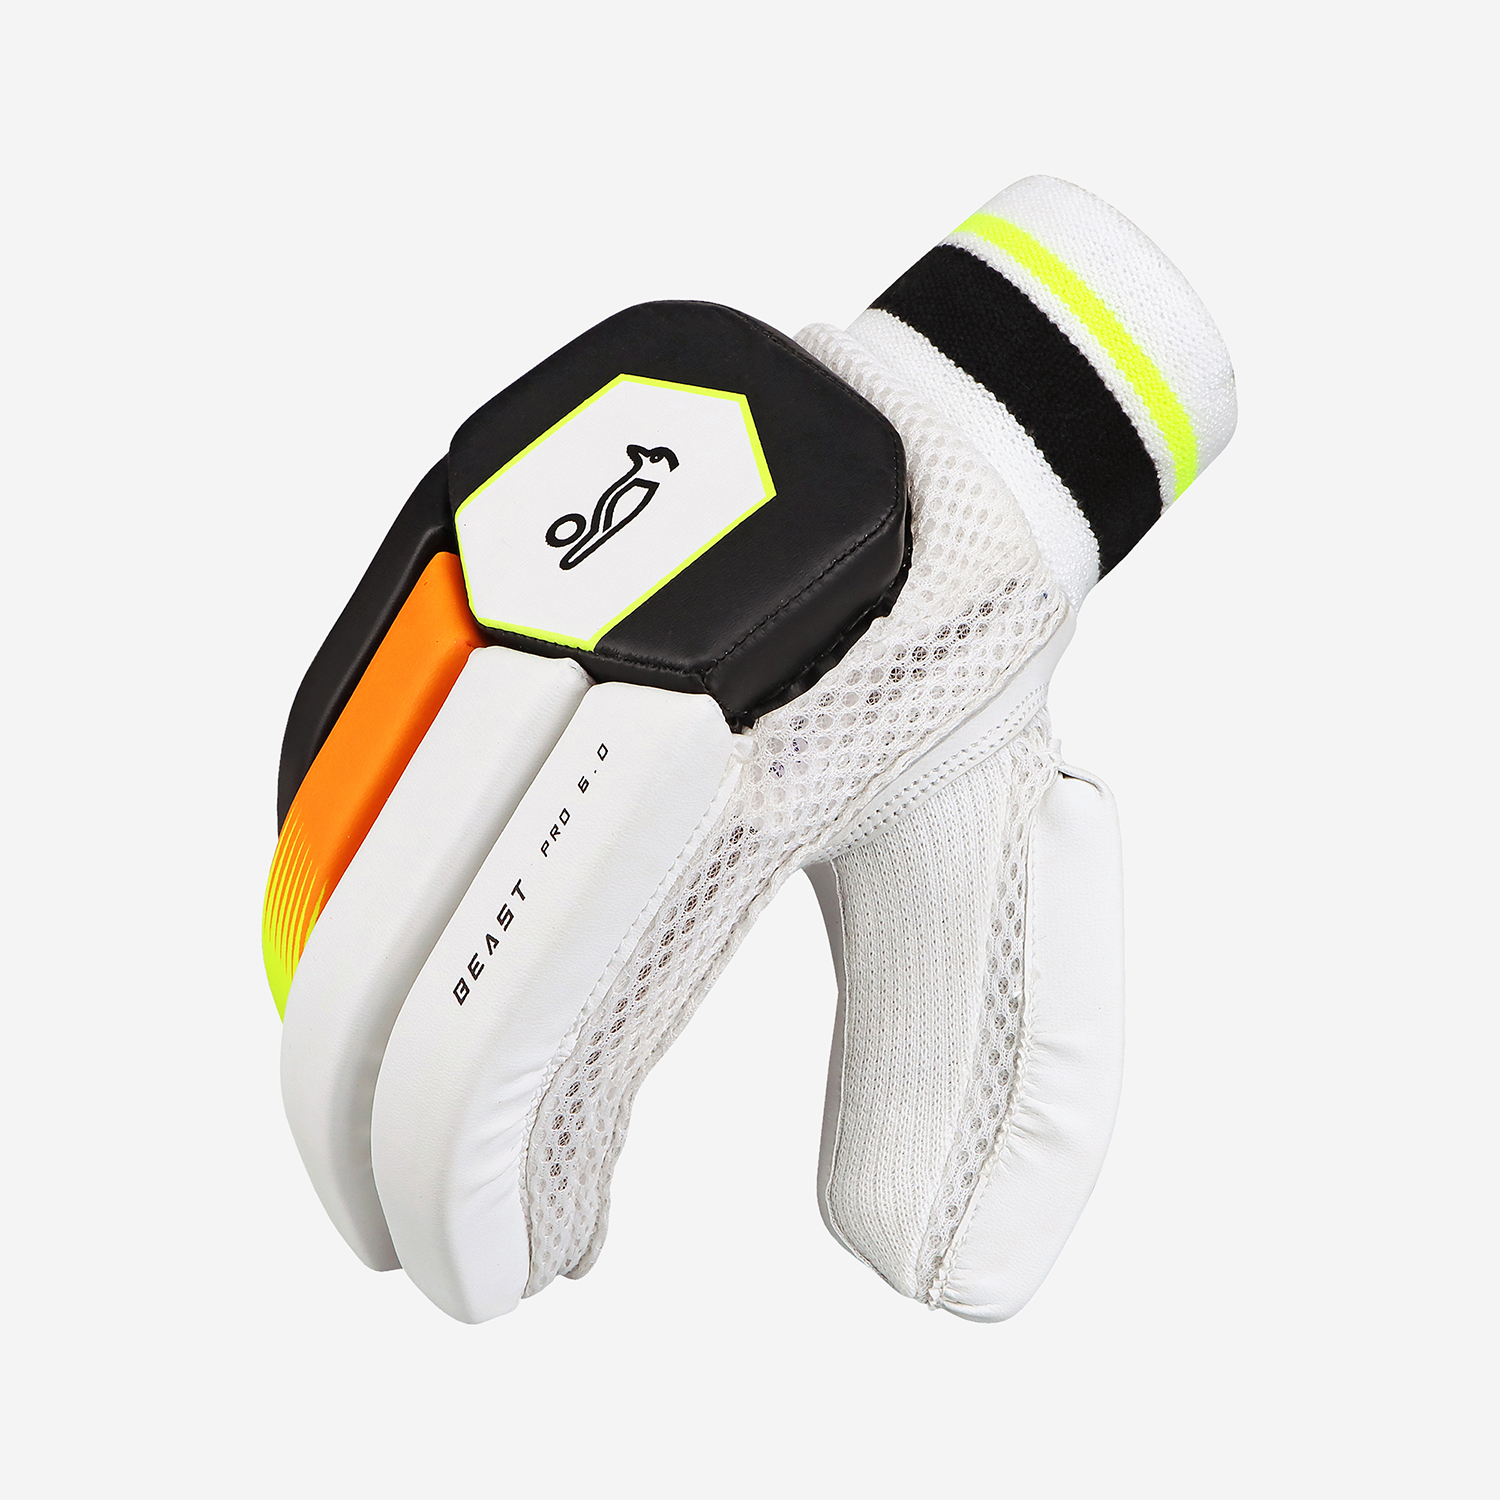 Pro 6.0 Beast Batting Gloves